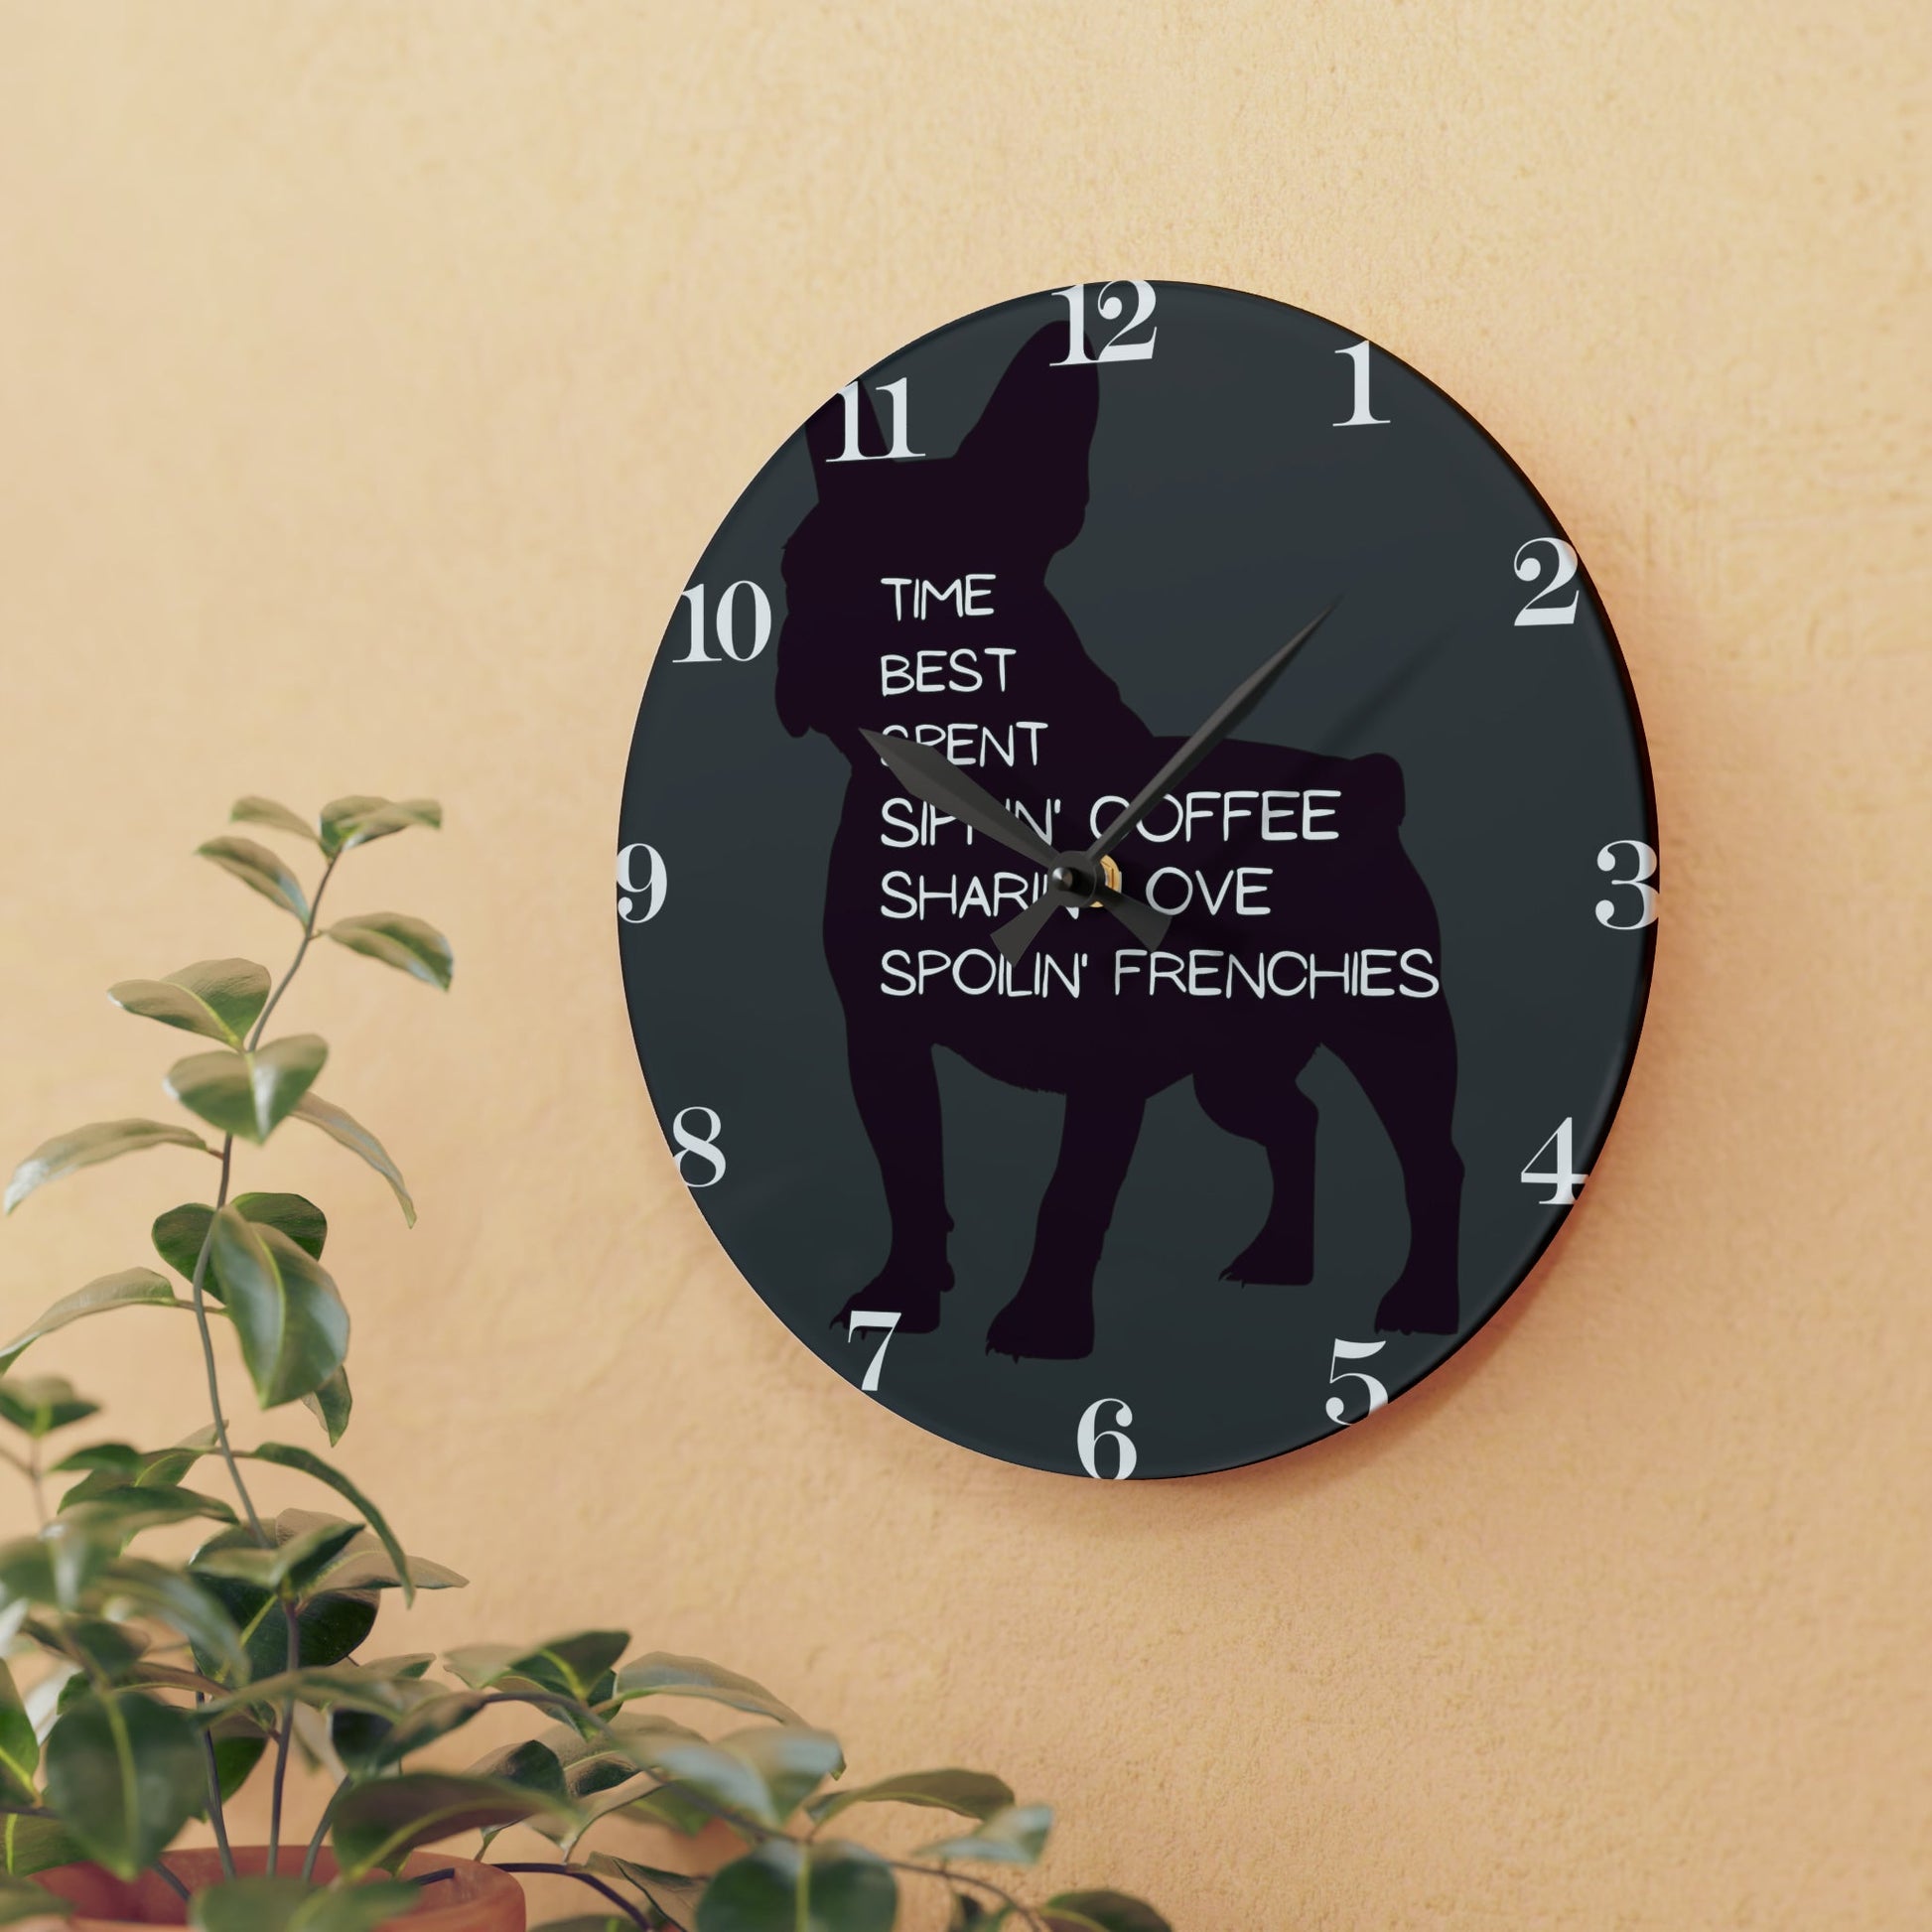 Spoilin’ Frenchies Wall Clock - Home Decor